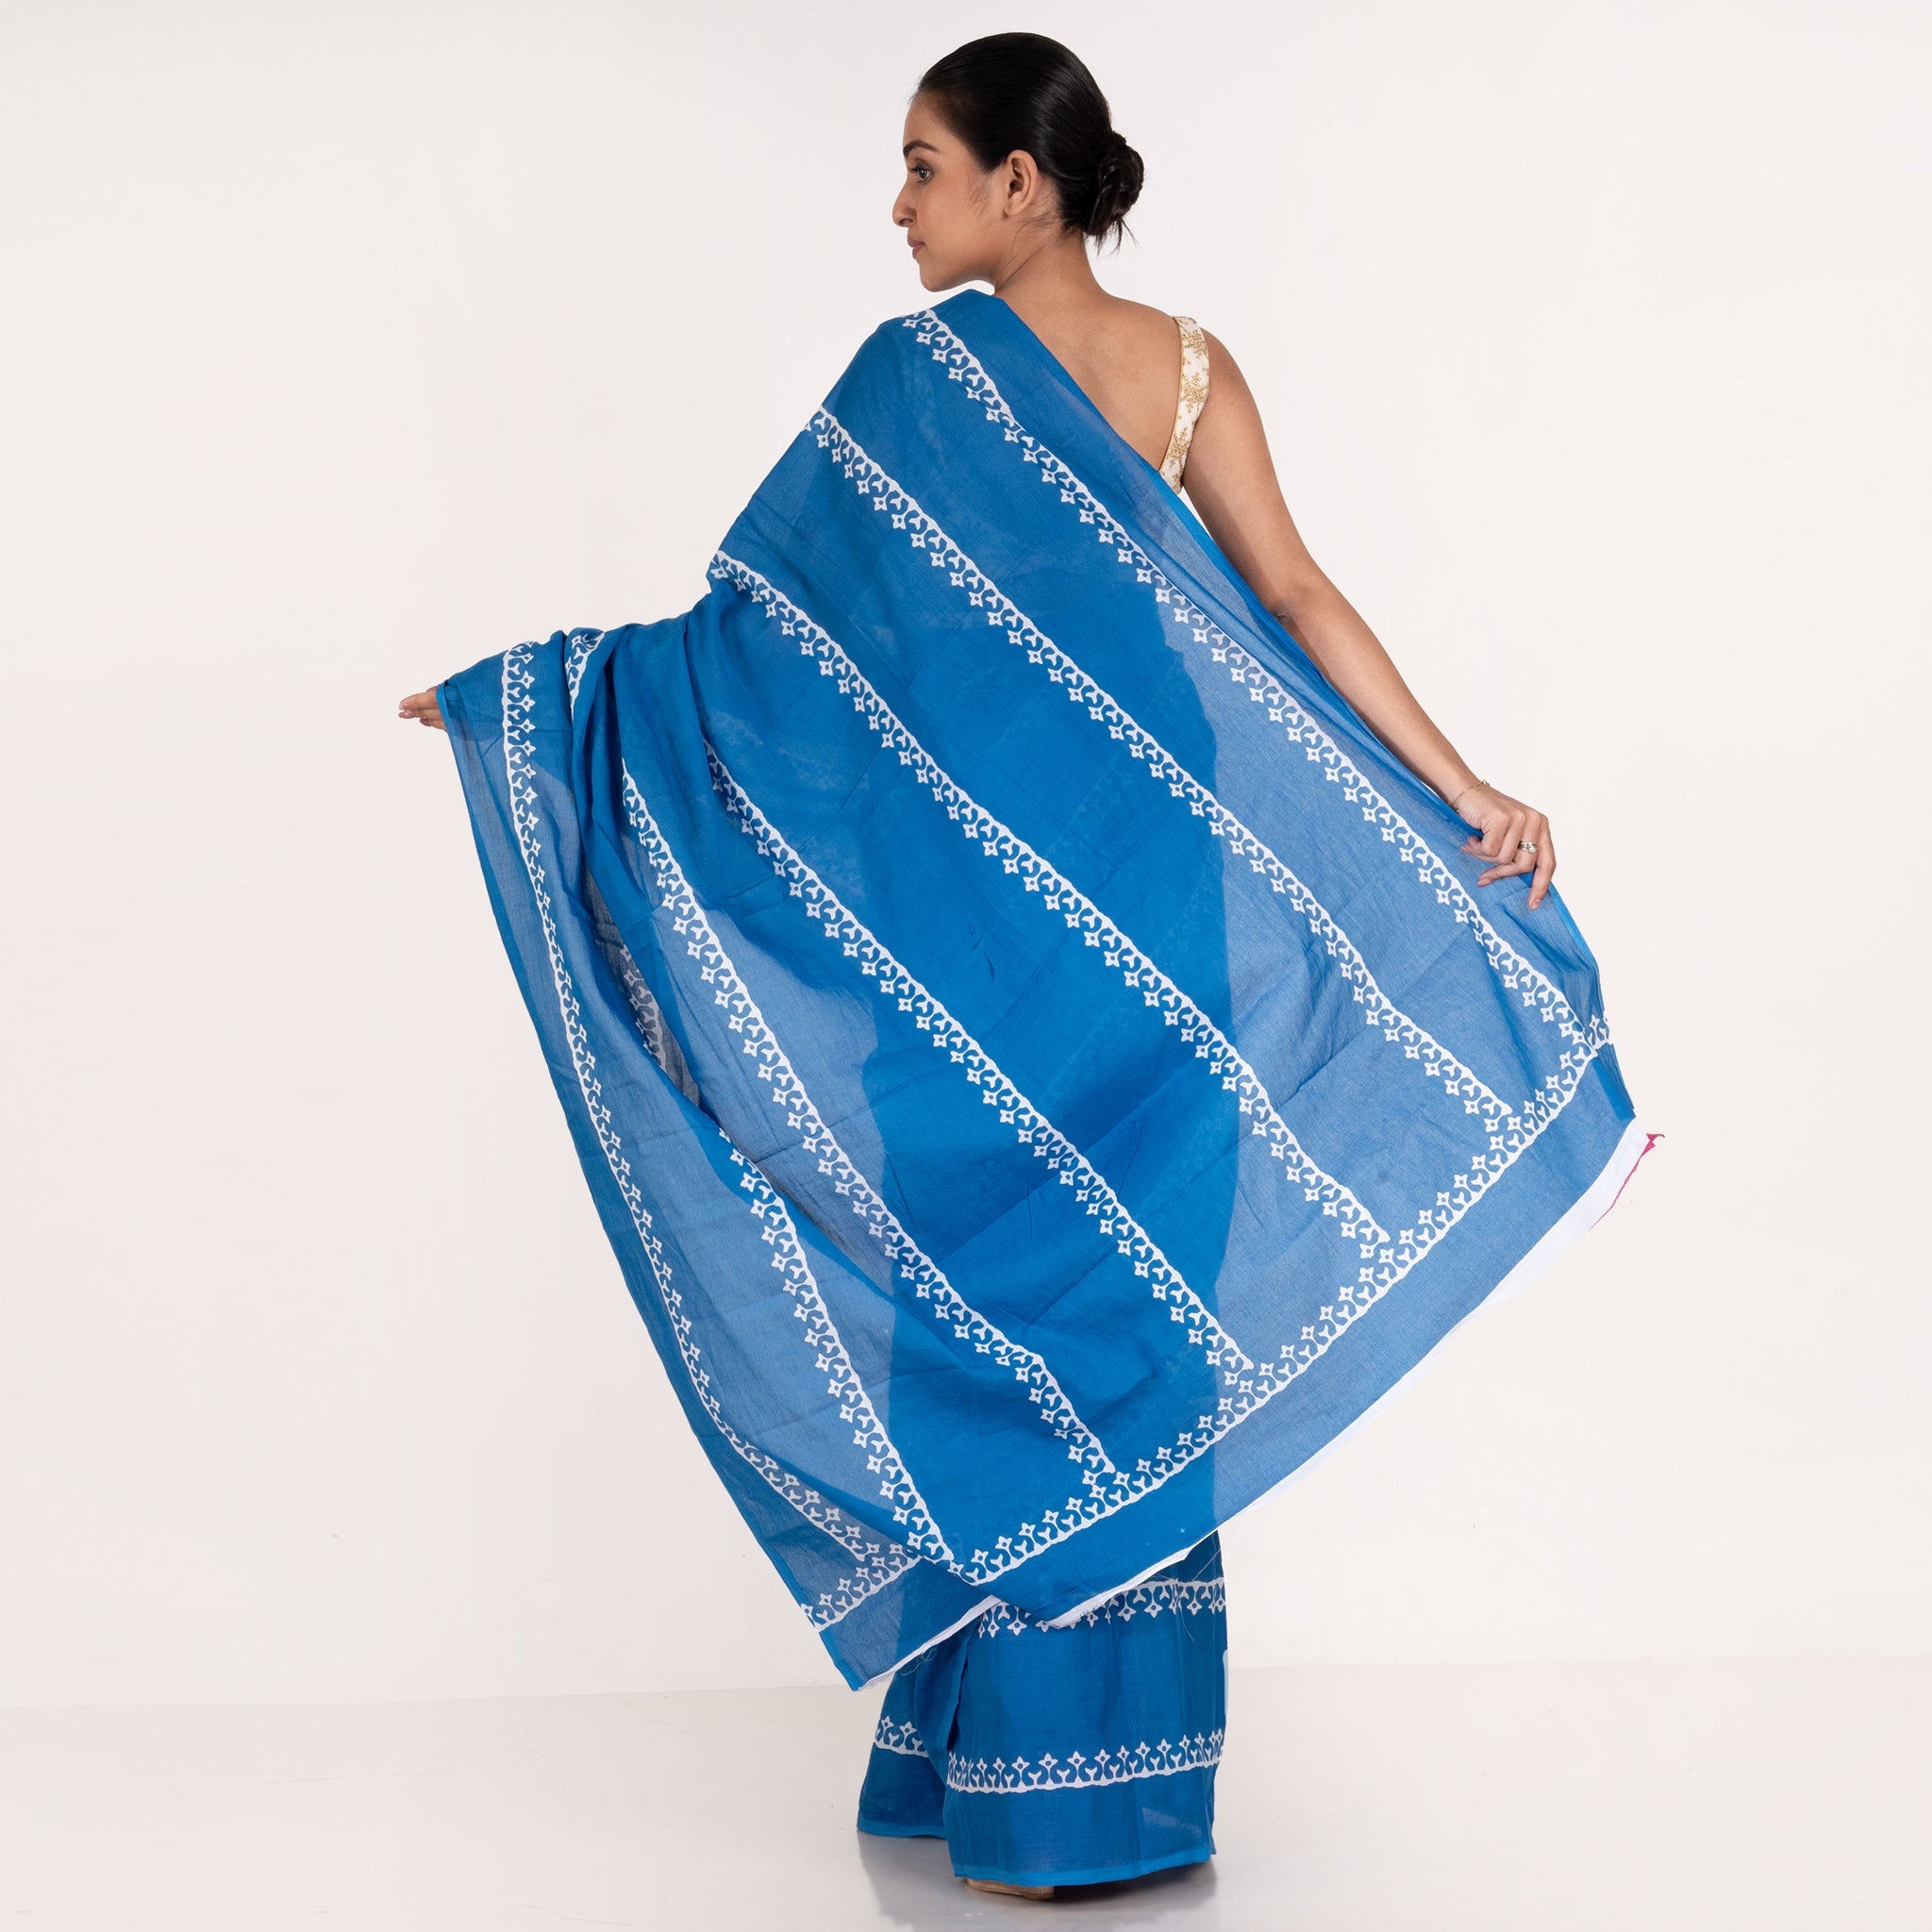 Women's Blue Handloom Bagru Malmal Saree With White Prints - Boveee